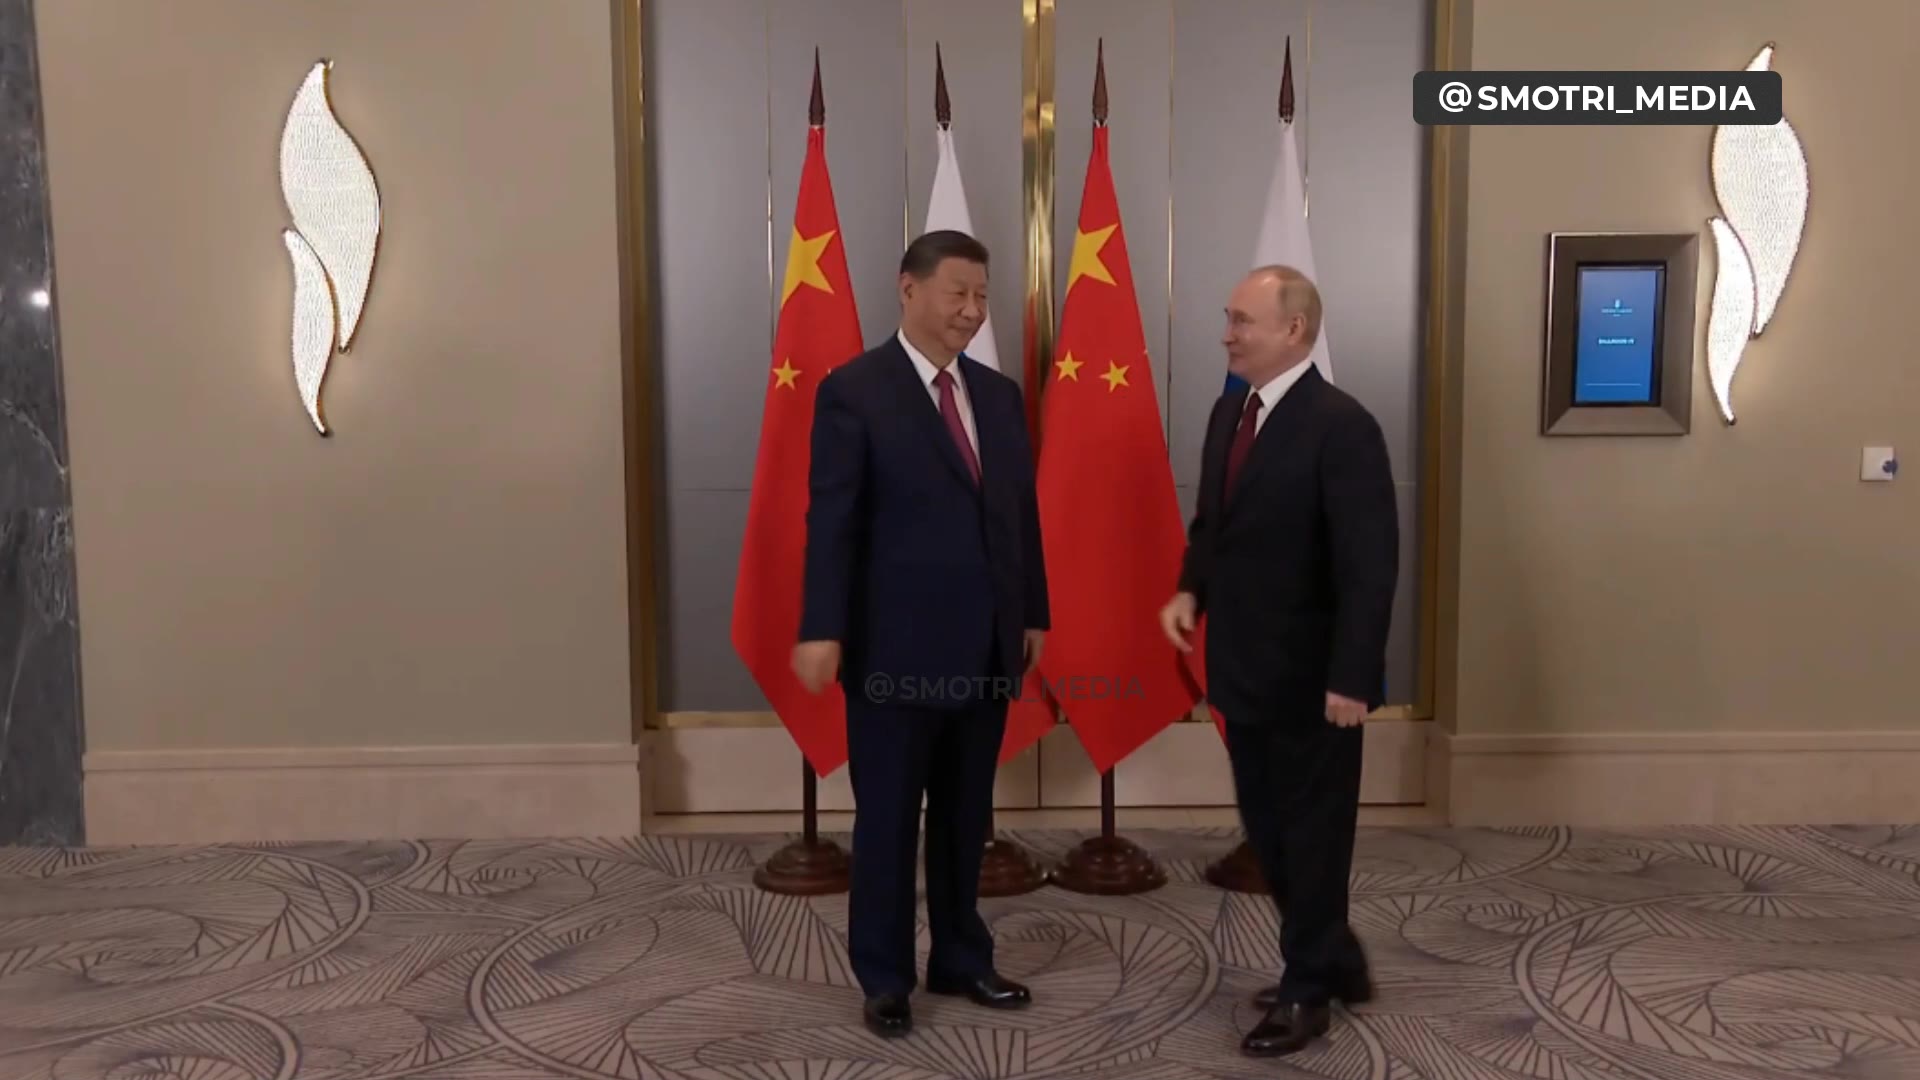 Putin begins negotiations with Xi Jinping.